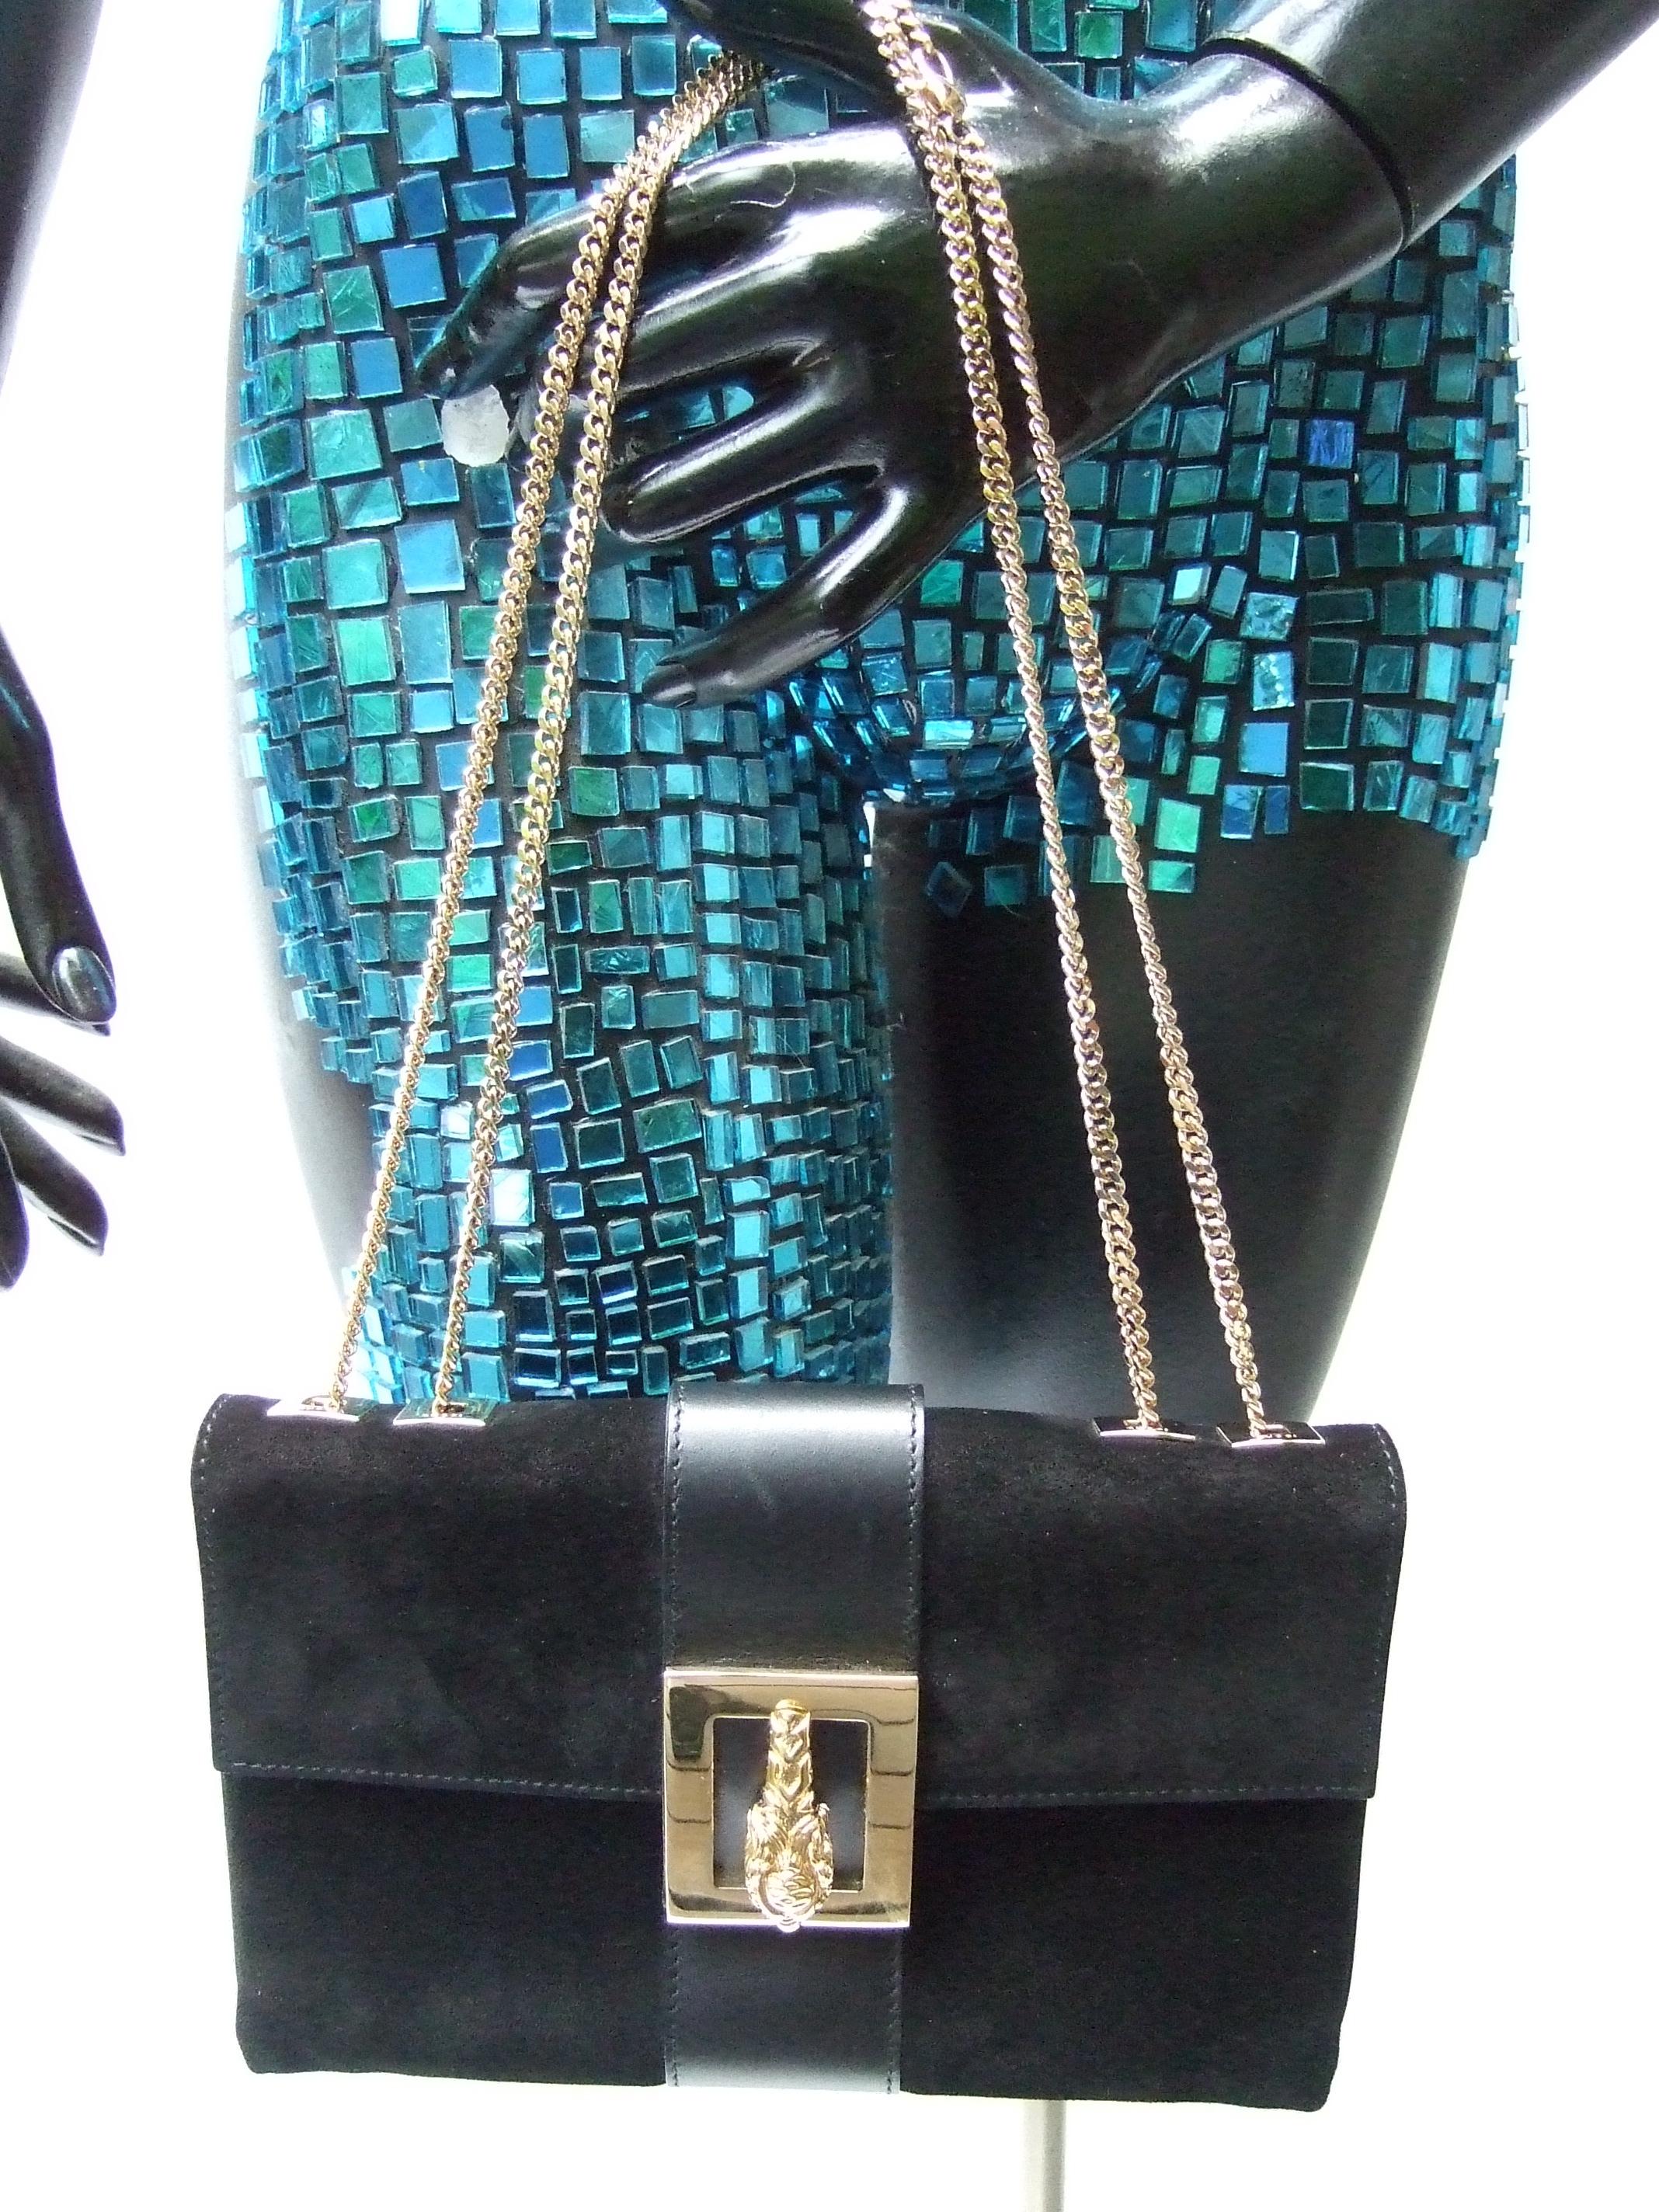 Women's Gucci Italy Rare Black Suede Tiger Emblem Handbag Tom Ford Era c 2000